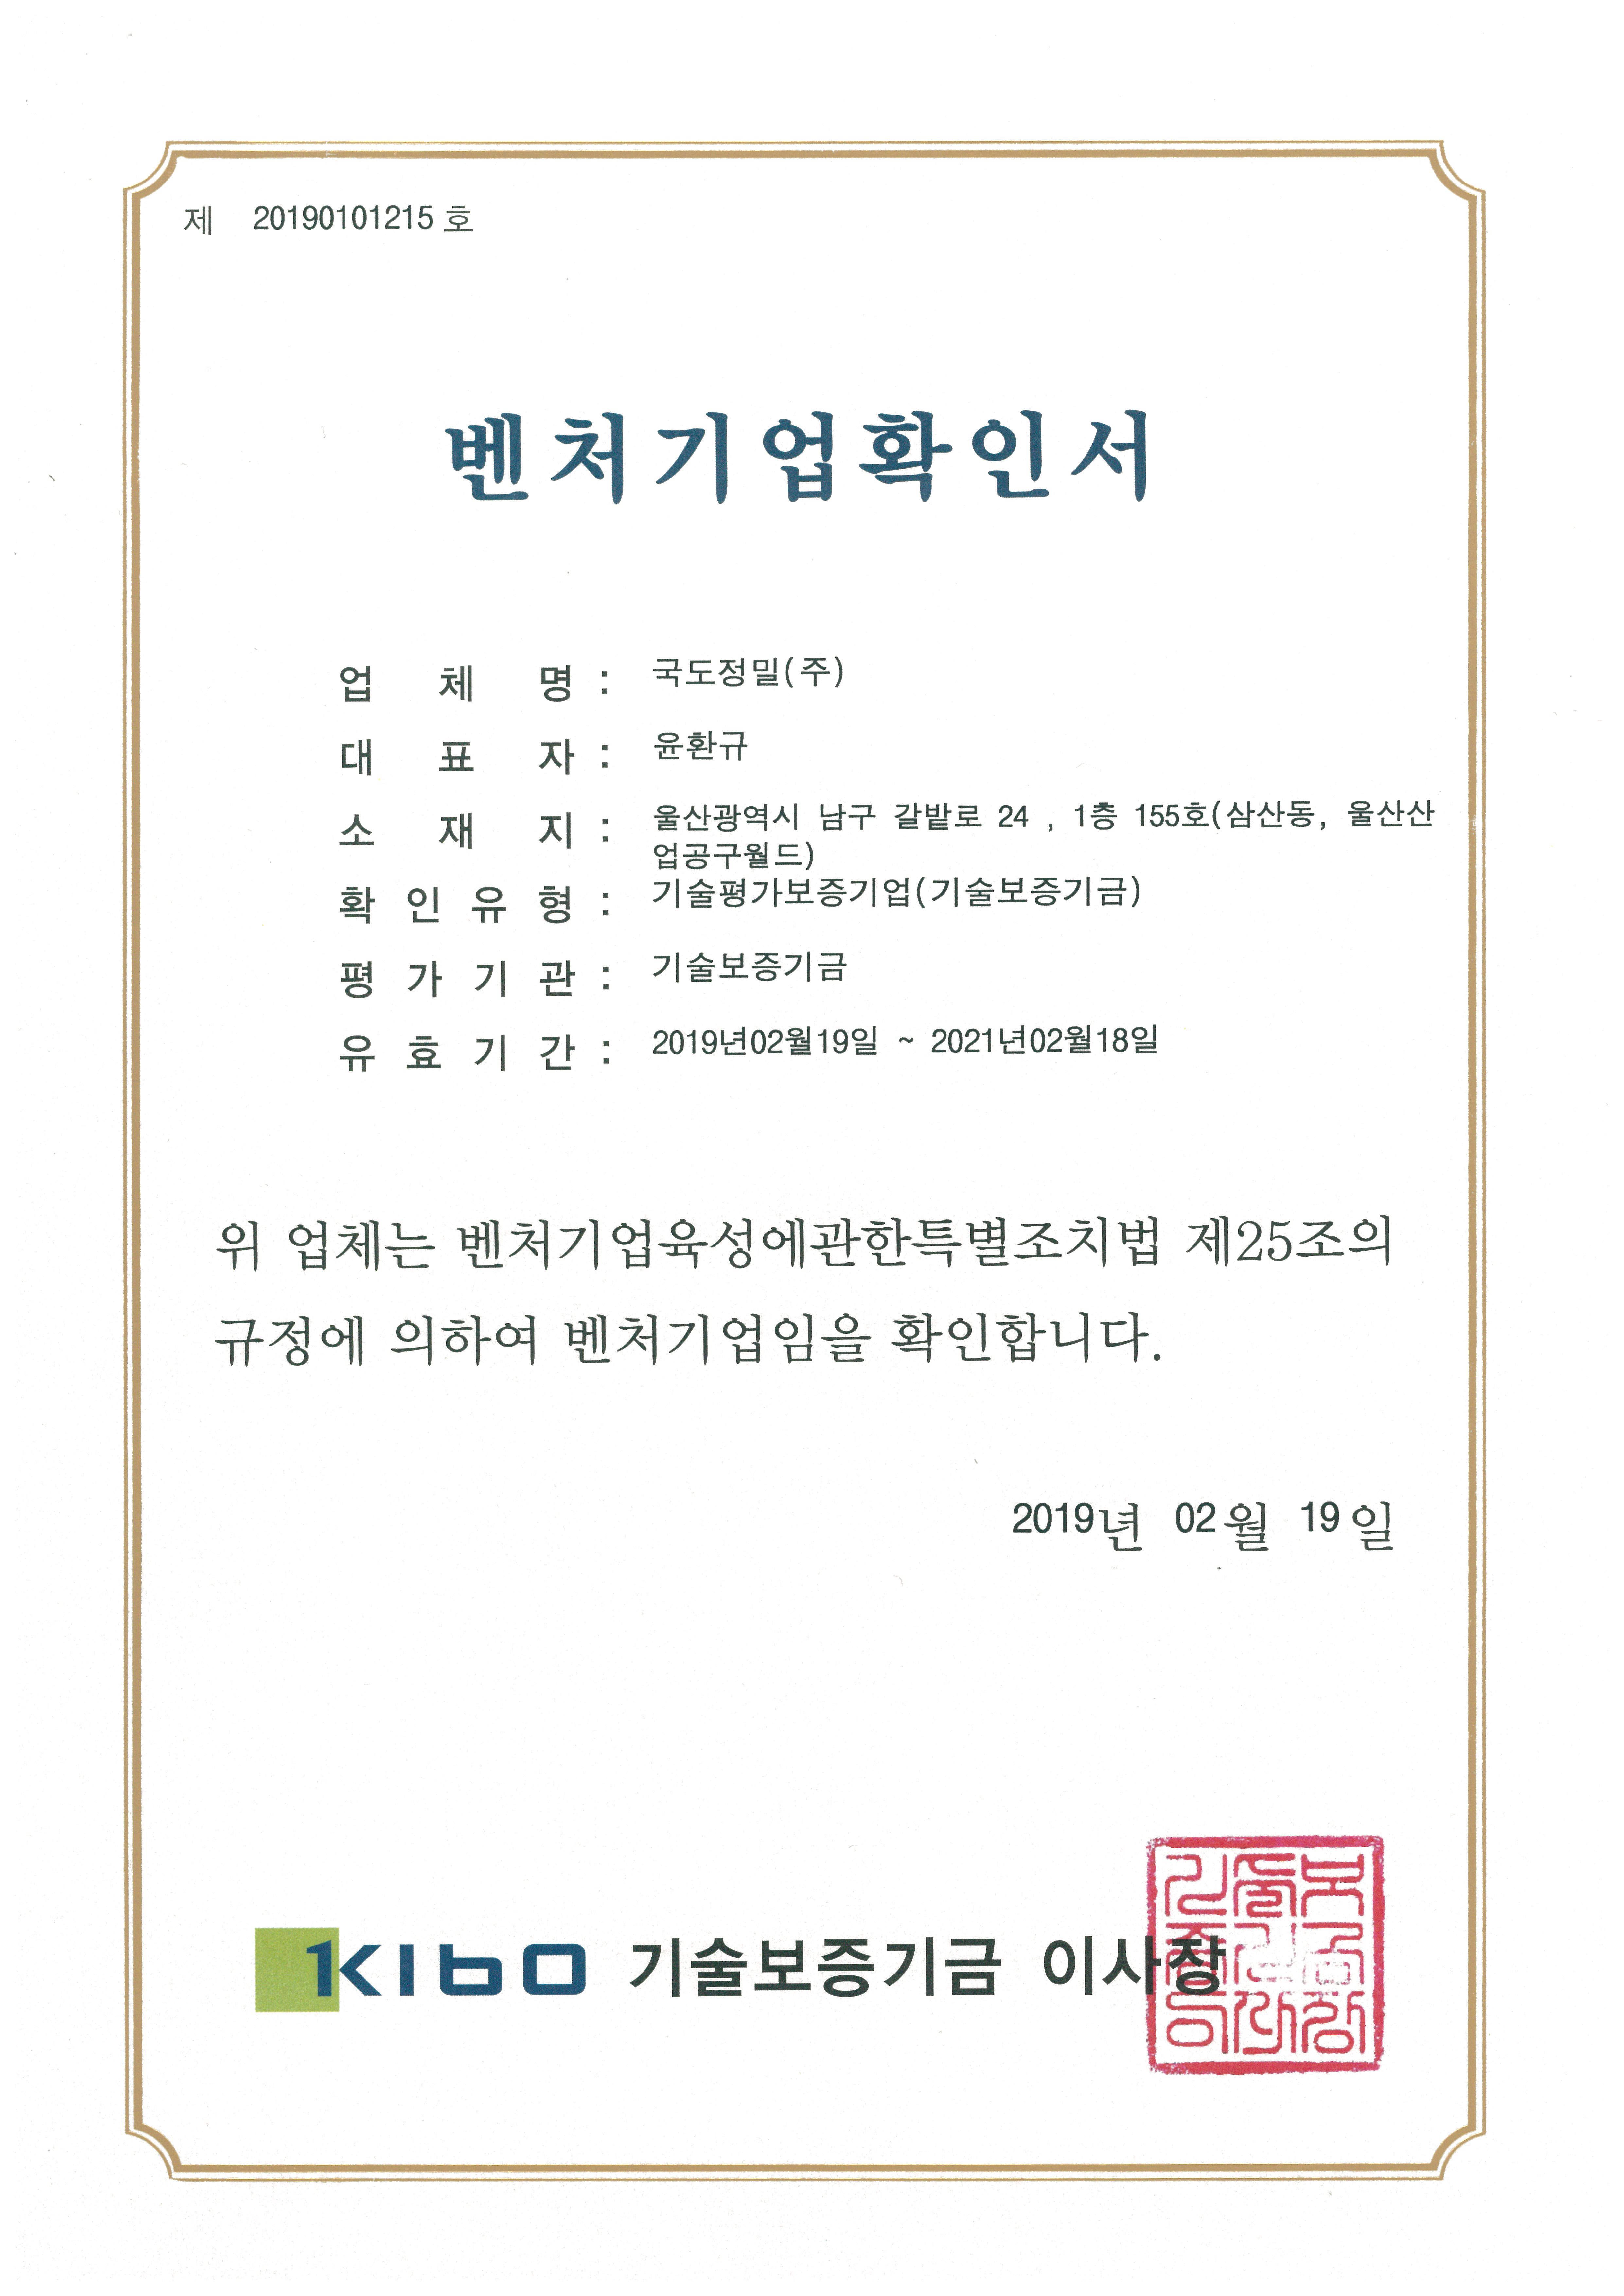 Venture Business Certificate